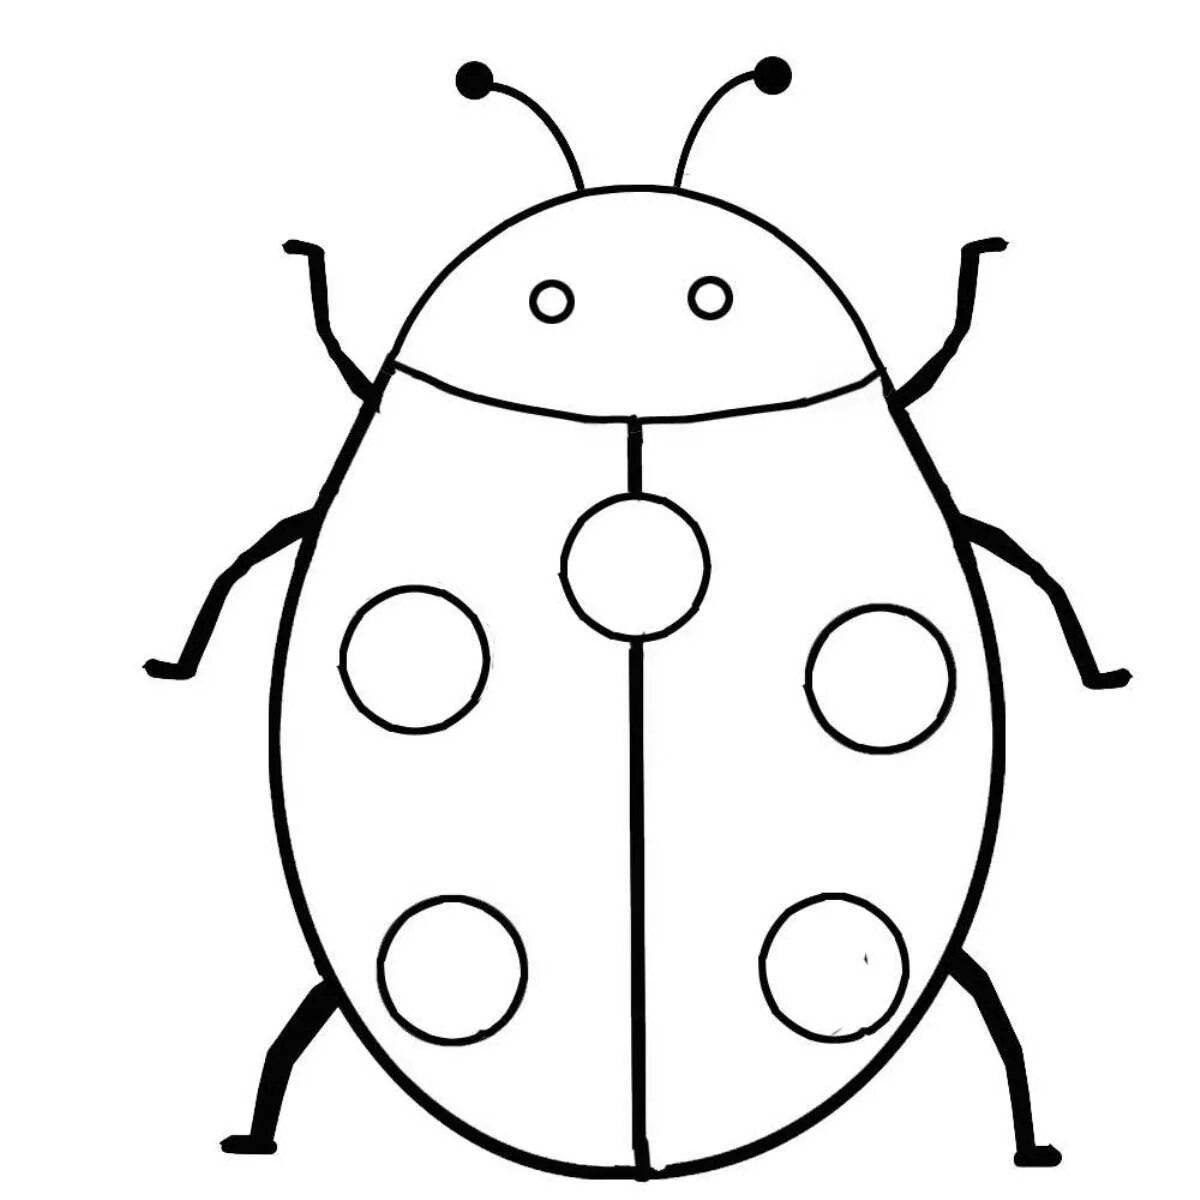 Animated ladybug coloring page for kids